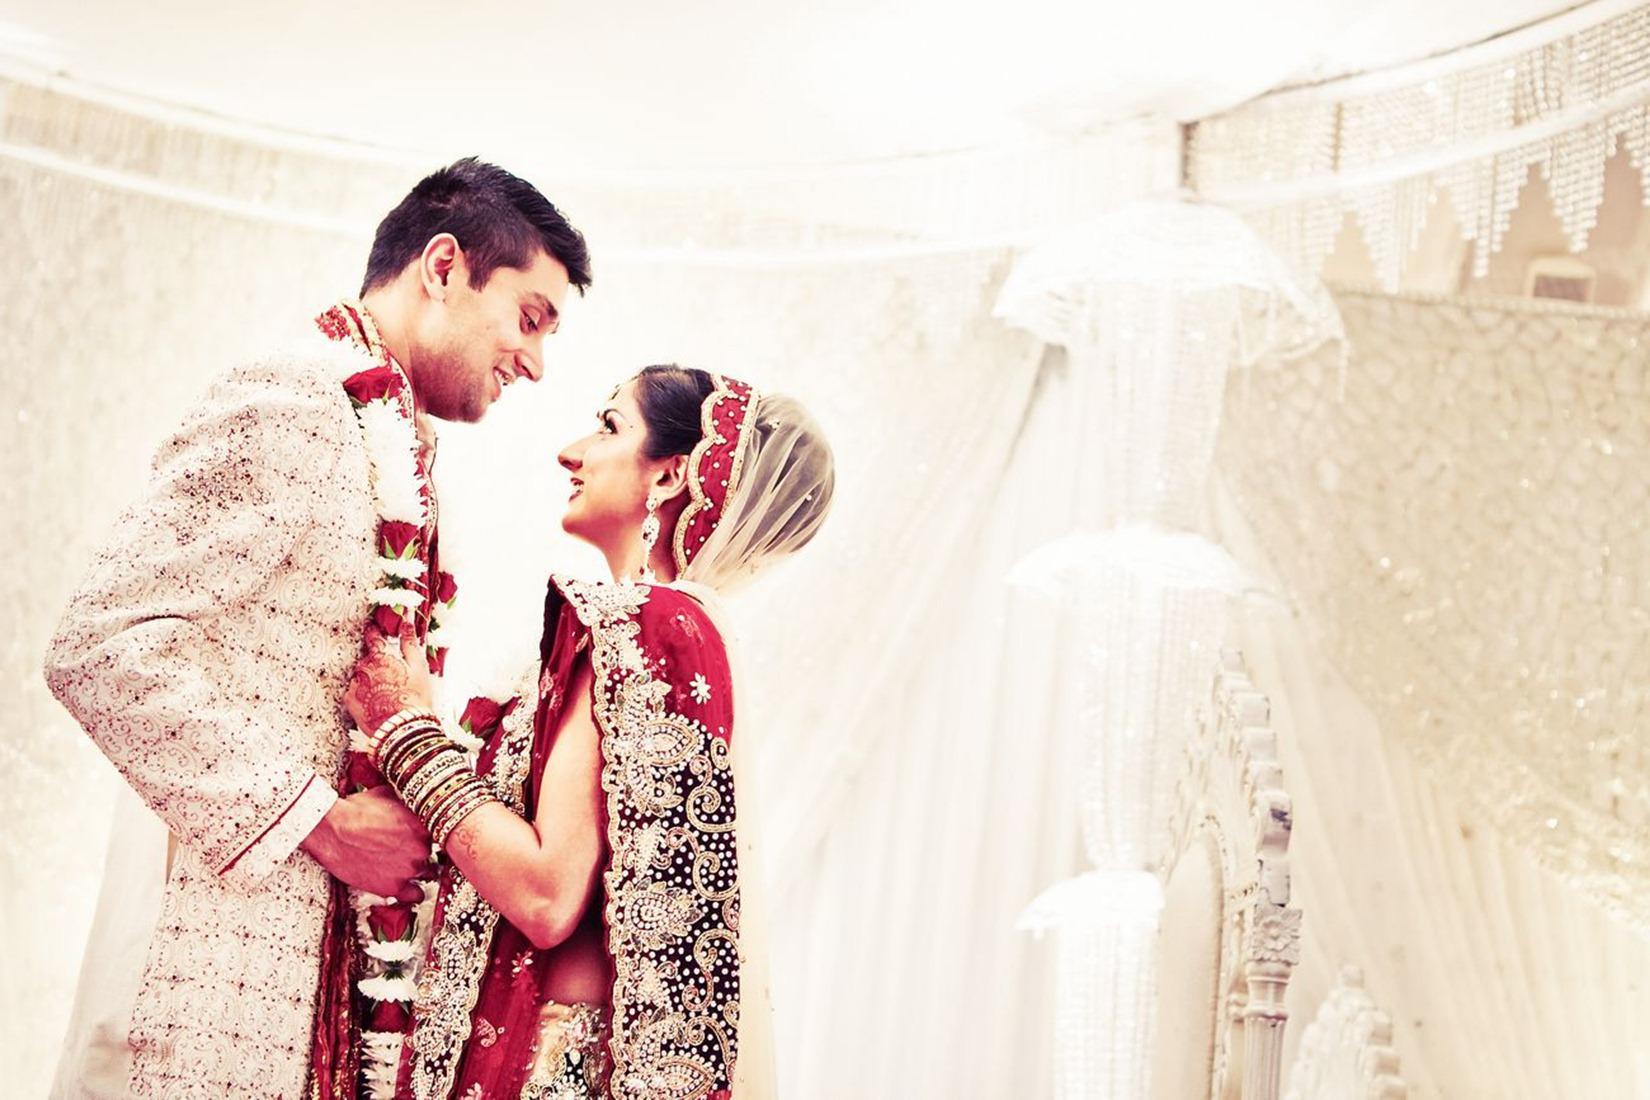 Indian Wedding Dresses HD Wallpaper